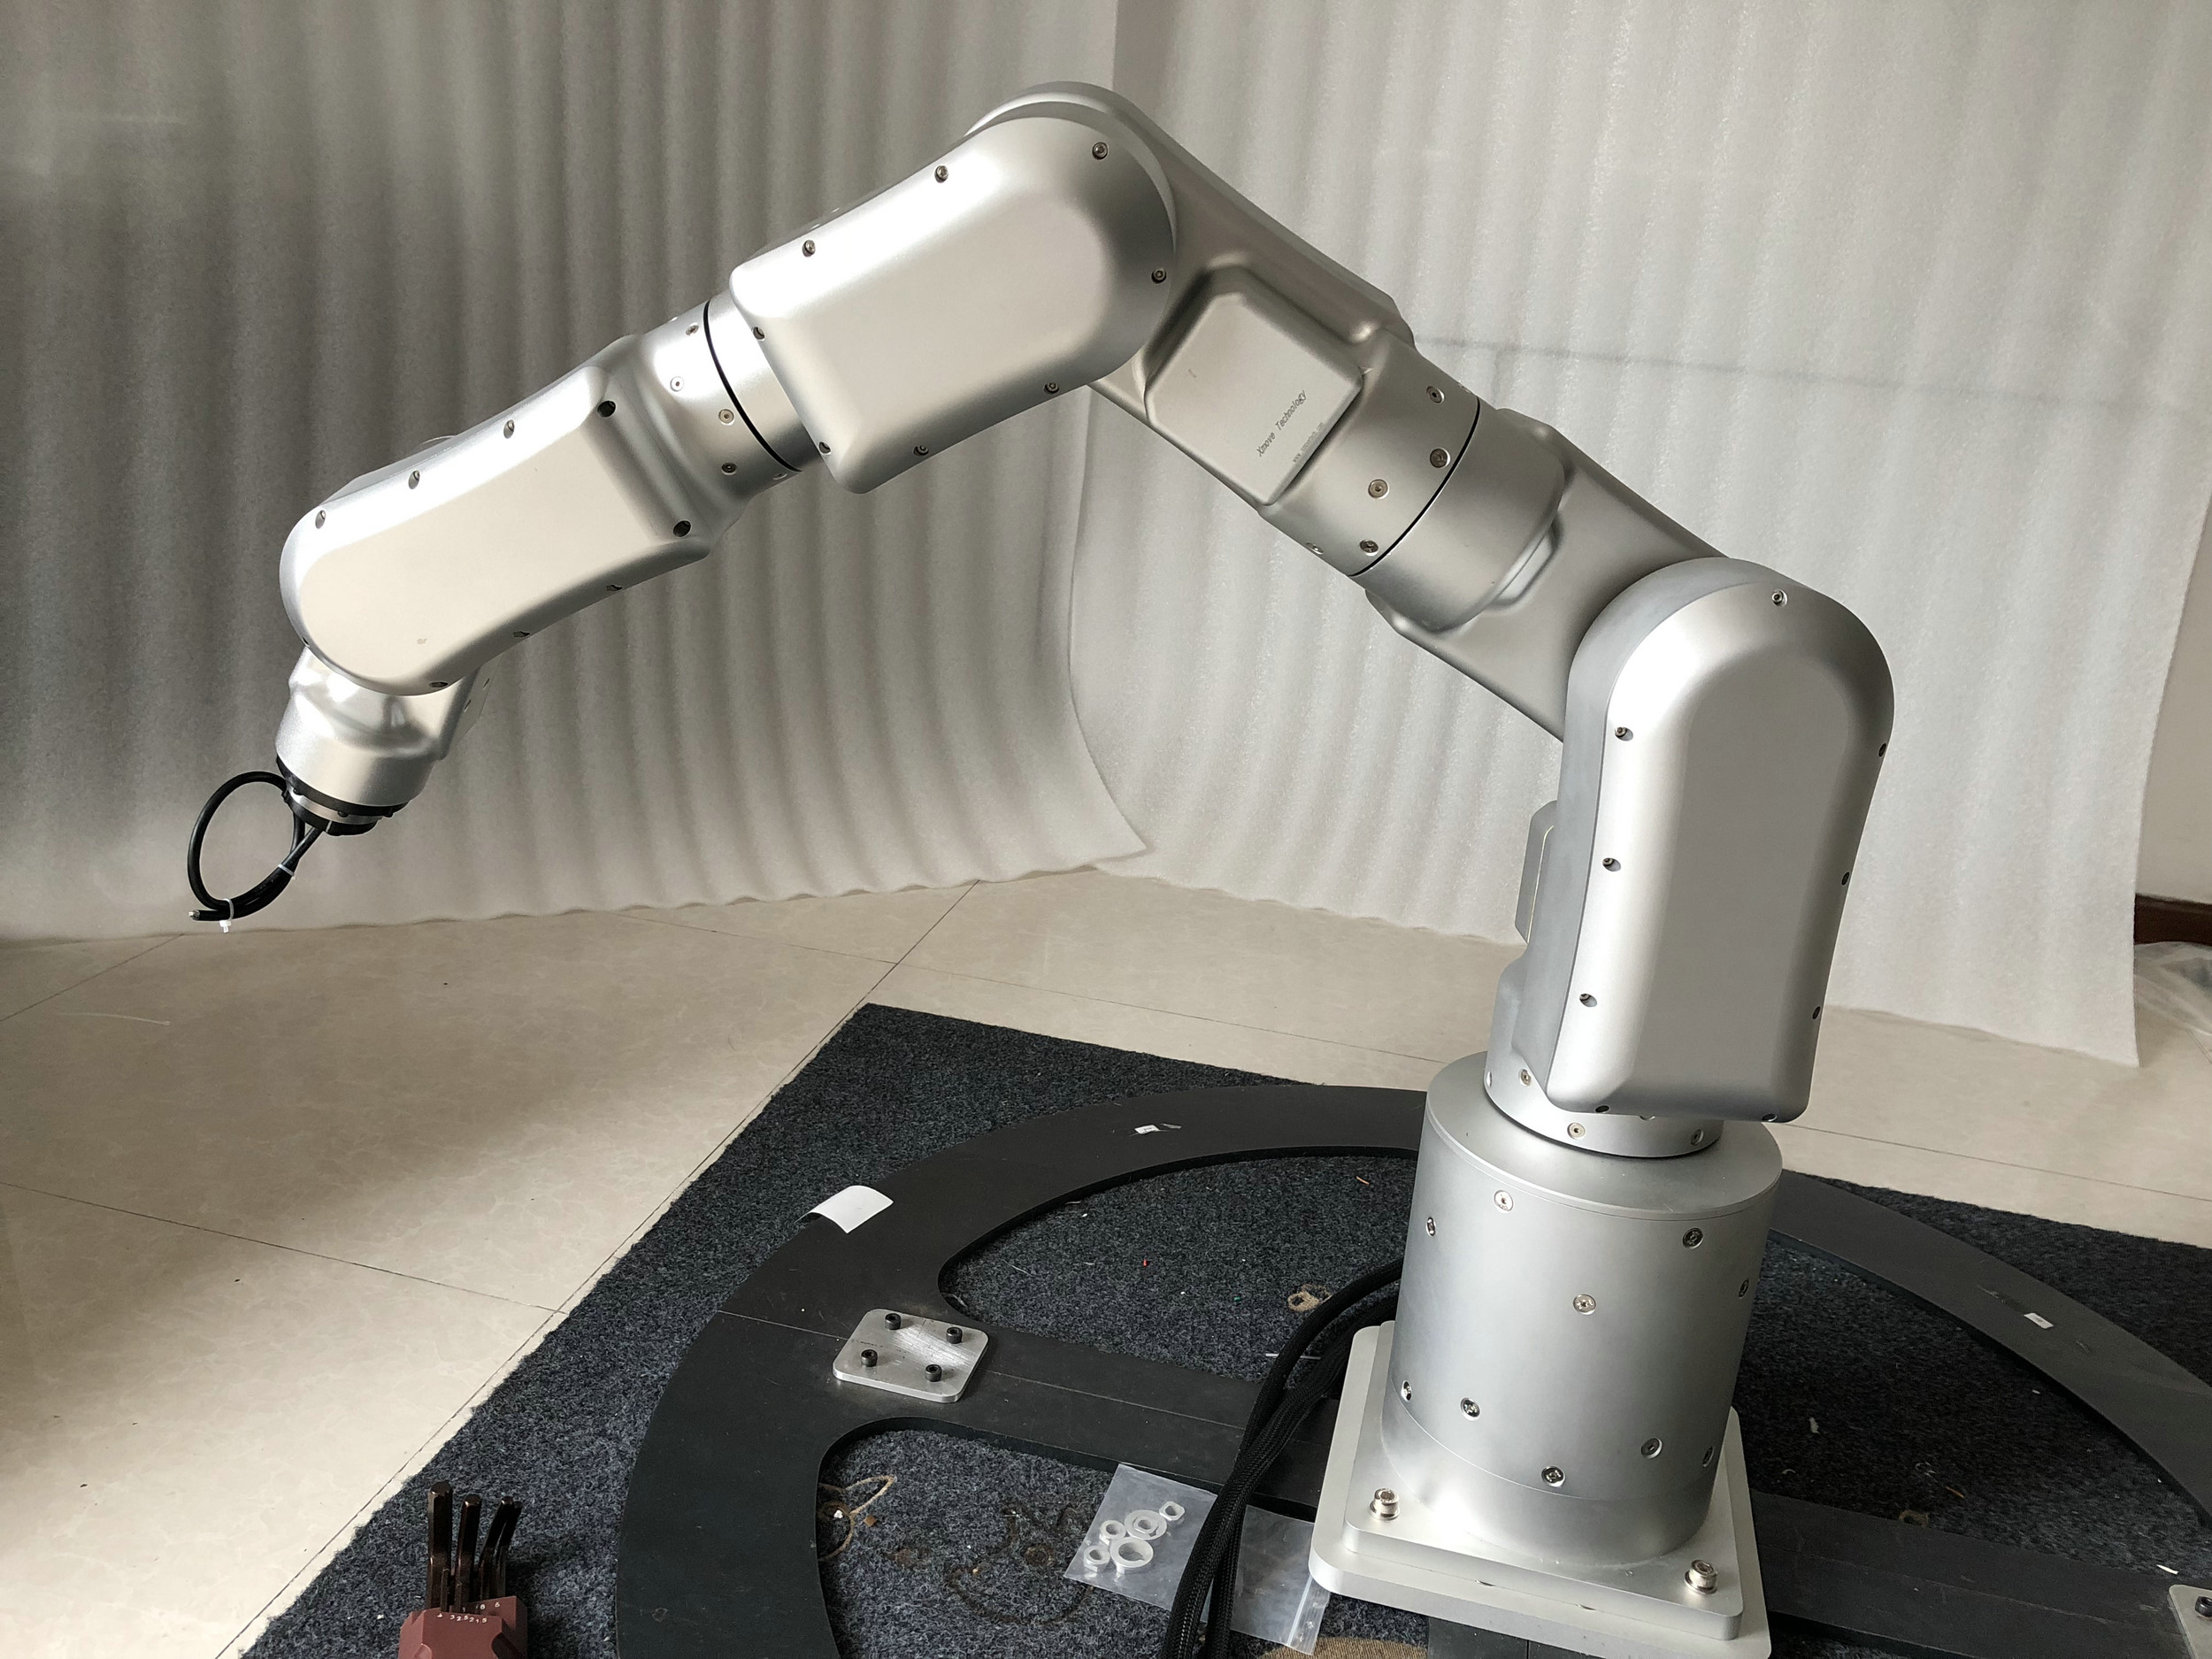 Intelligent robot development